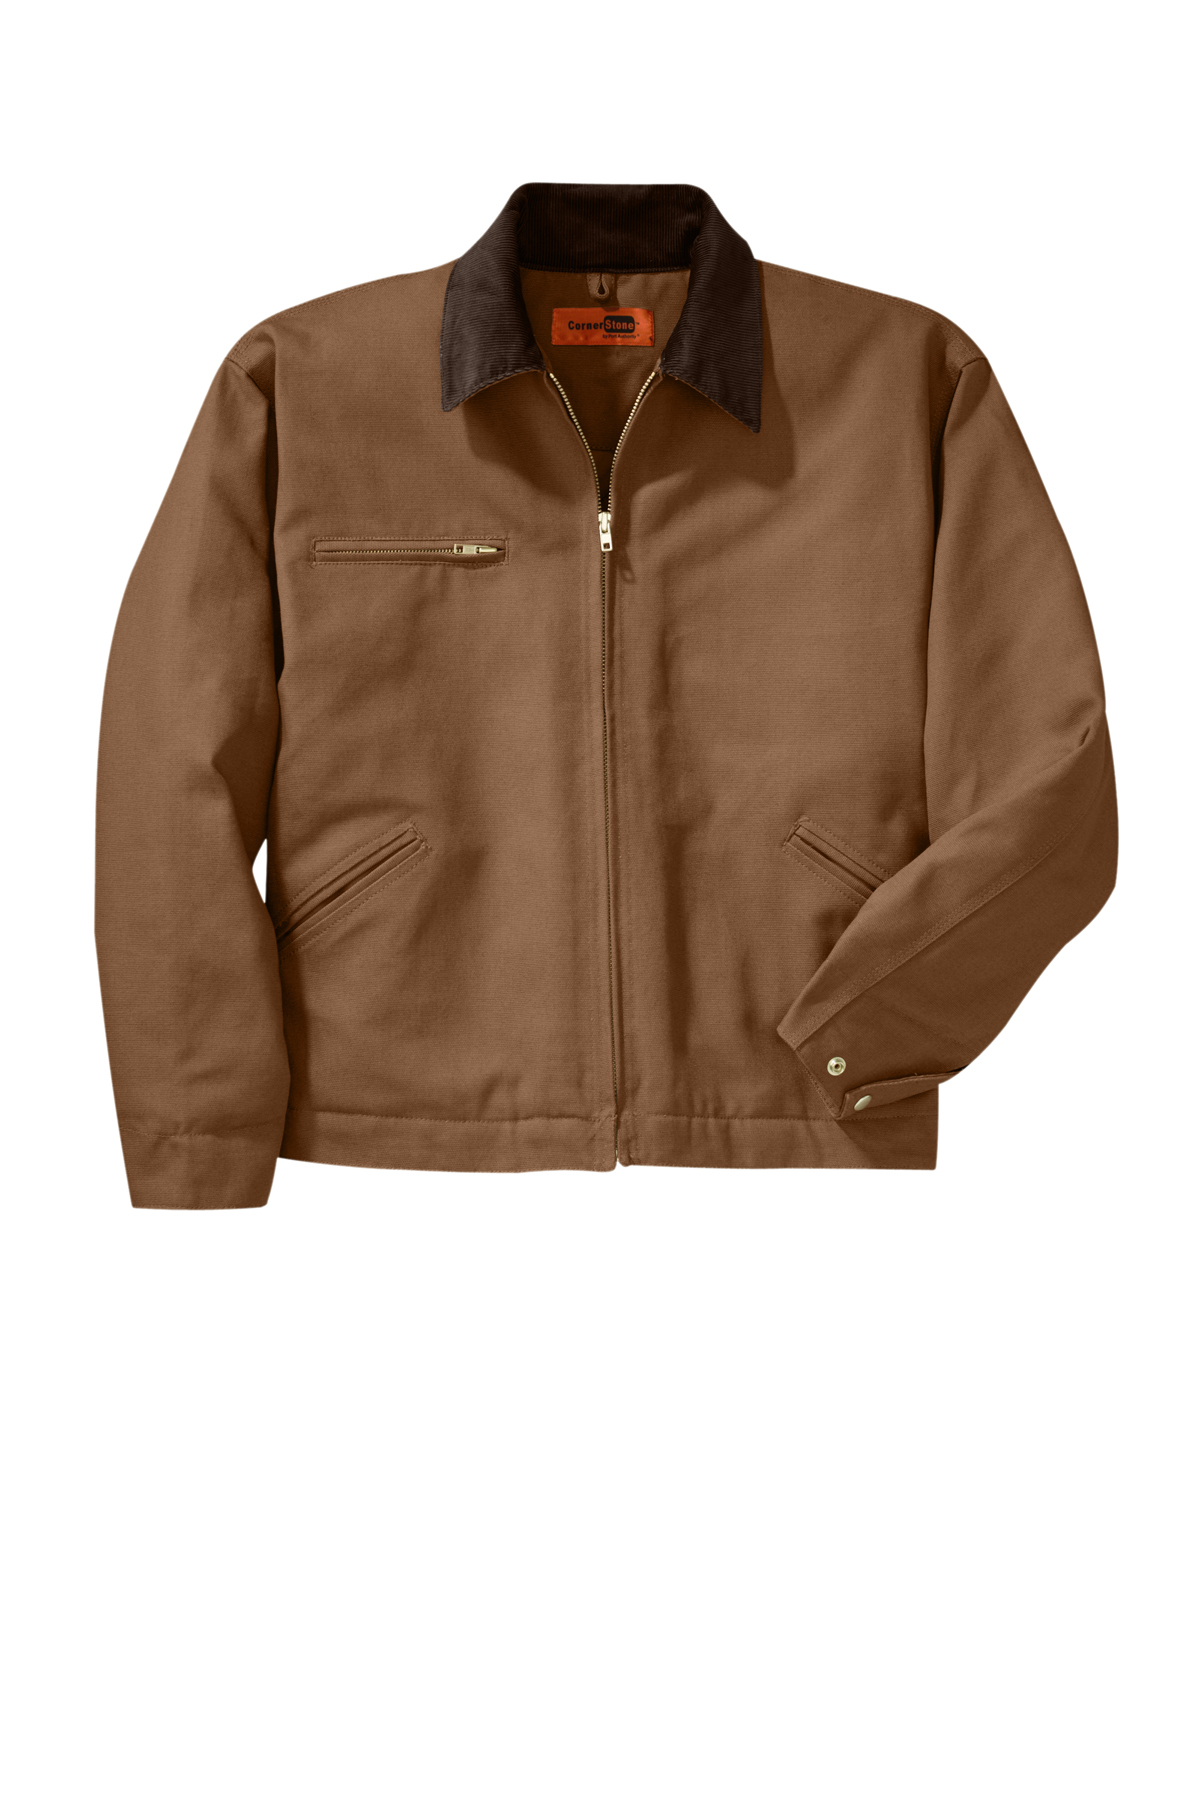 CornerStone Tall Duck Cloth Work Jacket | Product | CornerStone